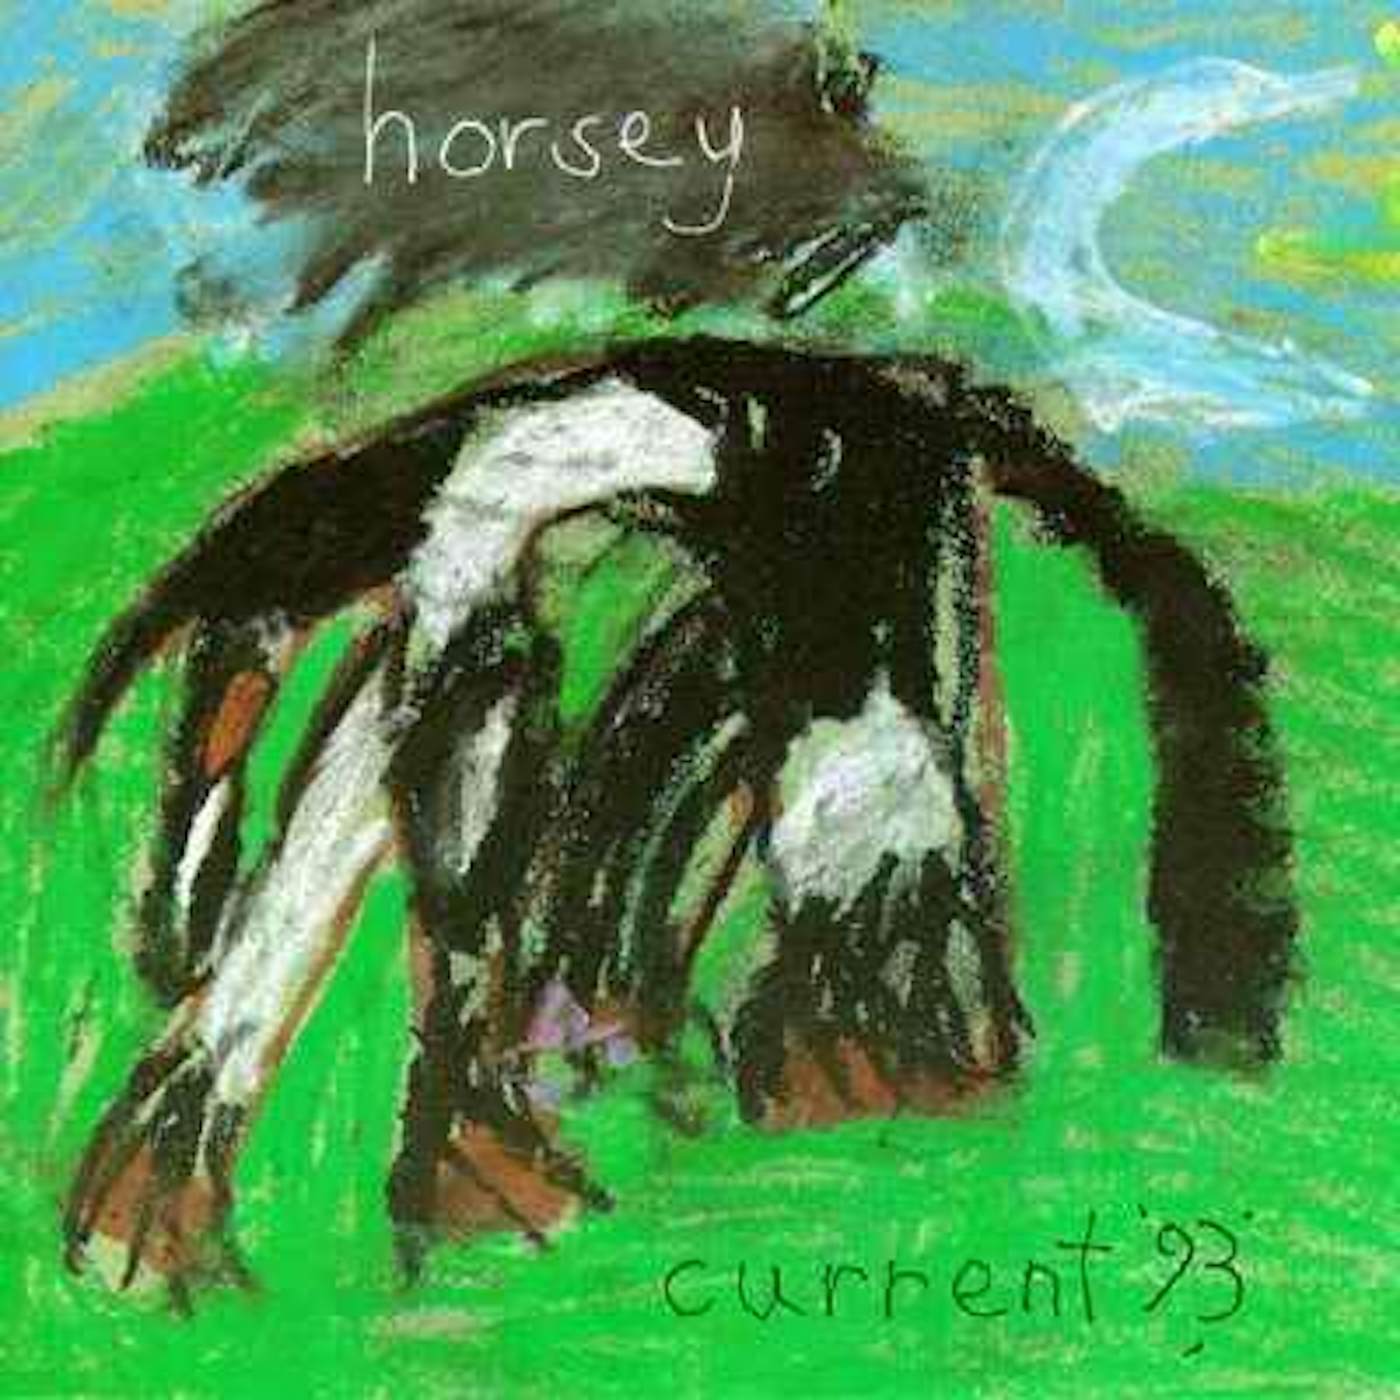 Current 93 HORSEY CD